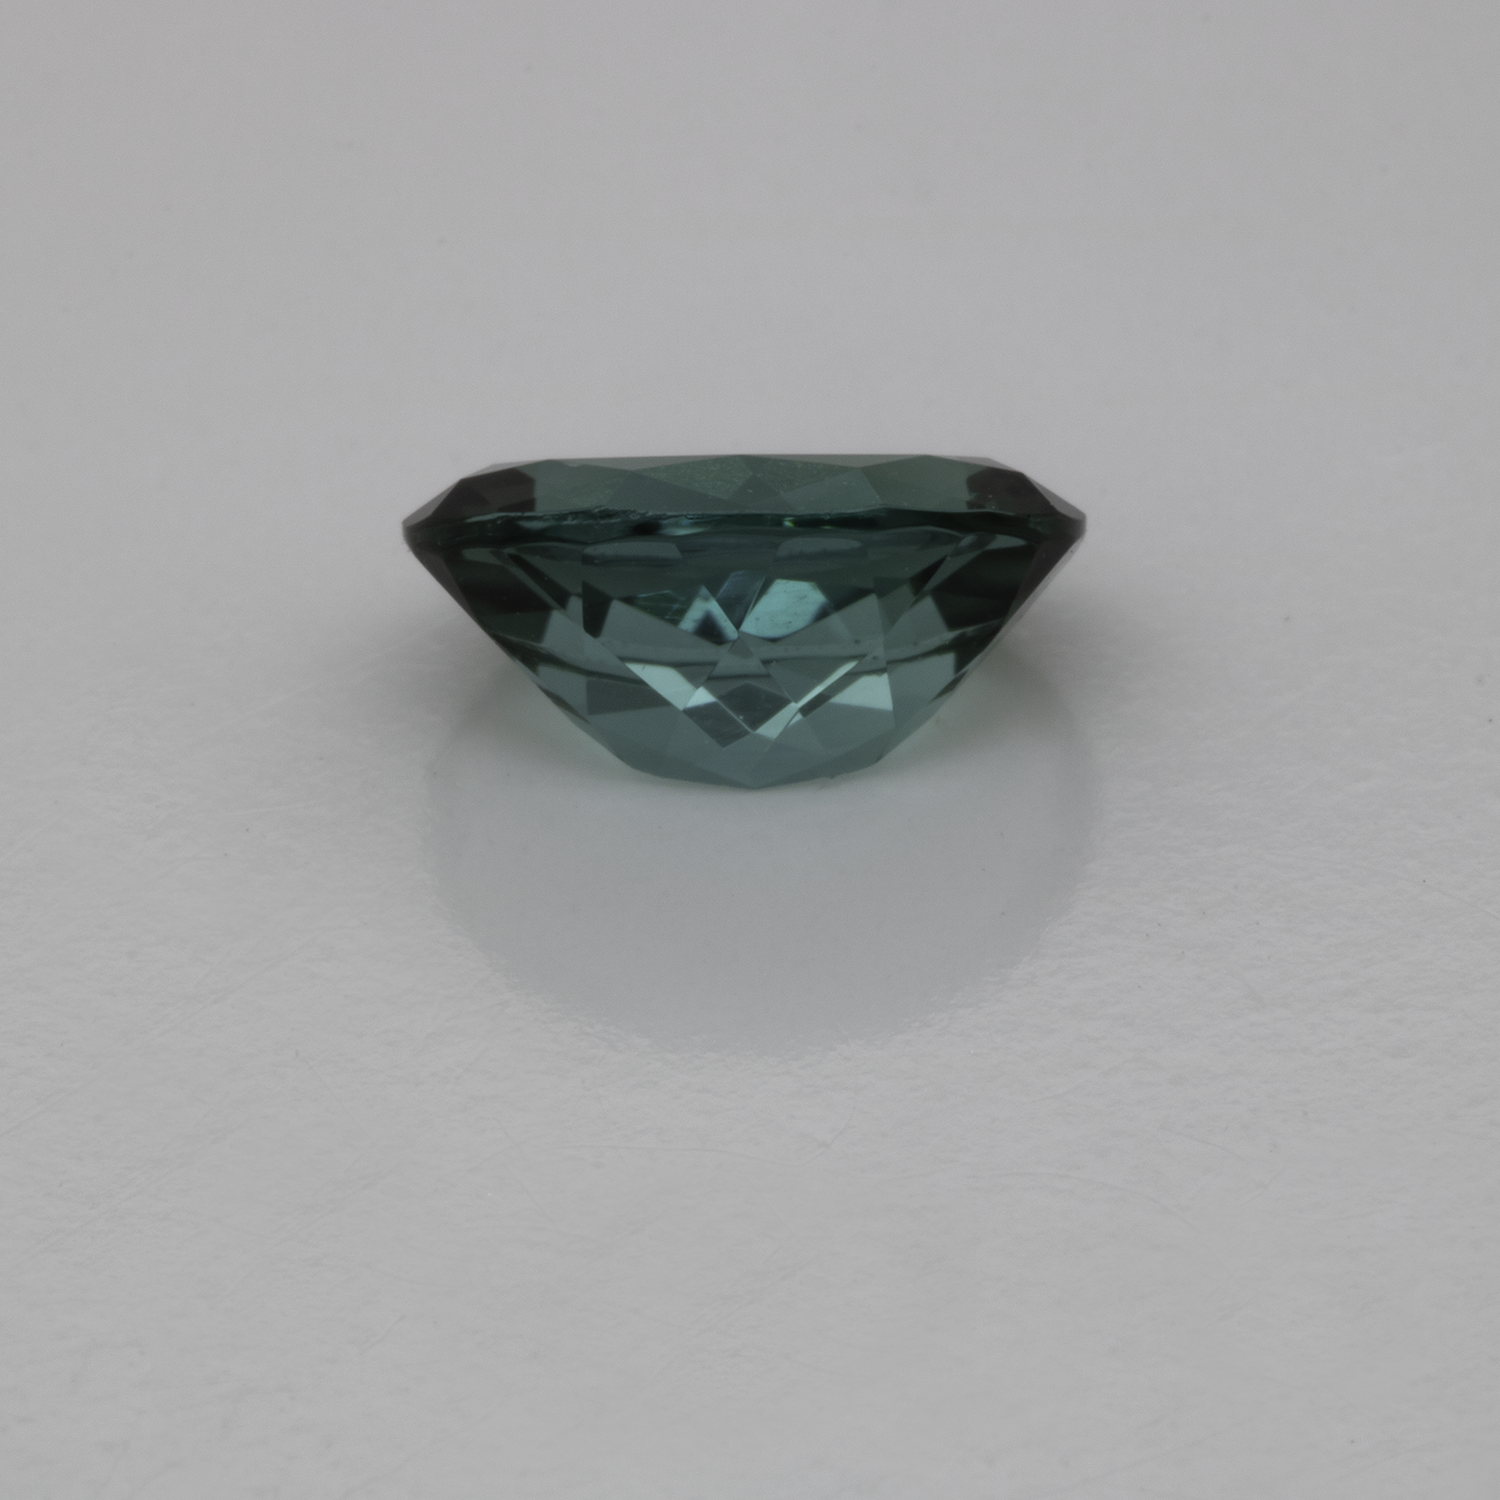 Tourmaline - green, oval, 7x5 mm, 0.72-0.77 cts, No. TR27002